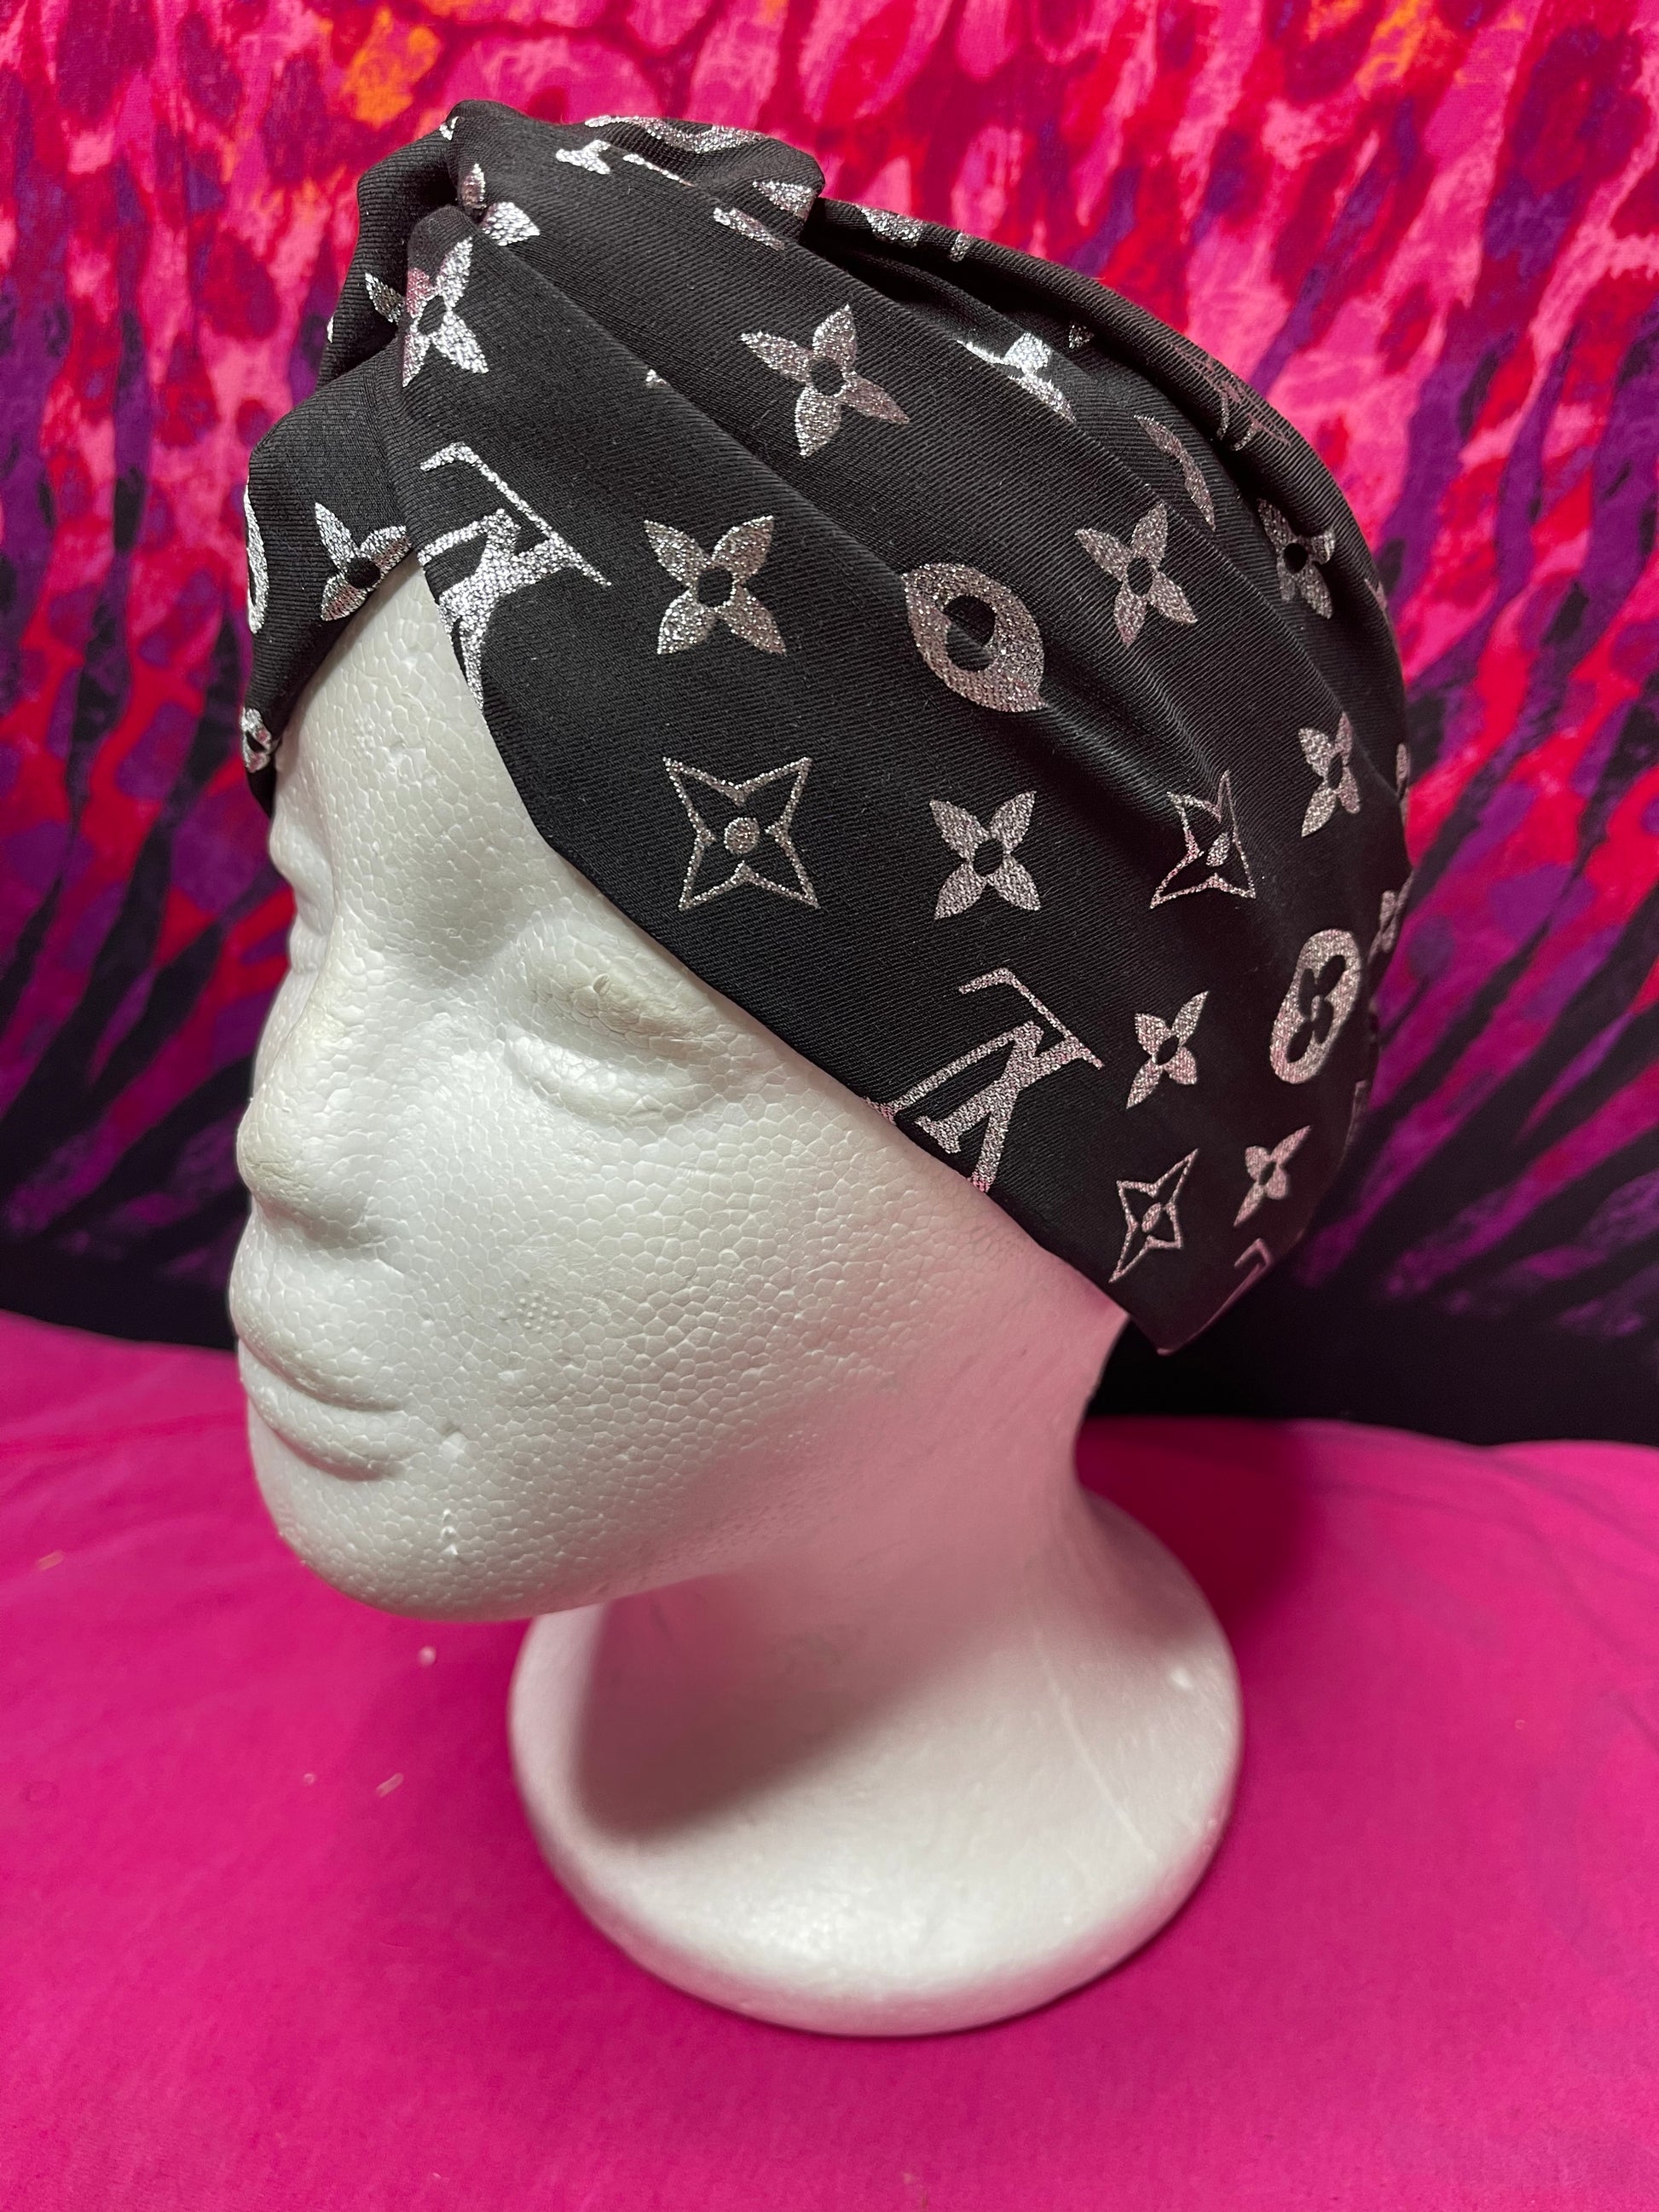 Pink LV headband .